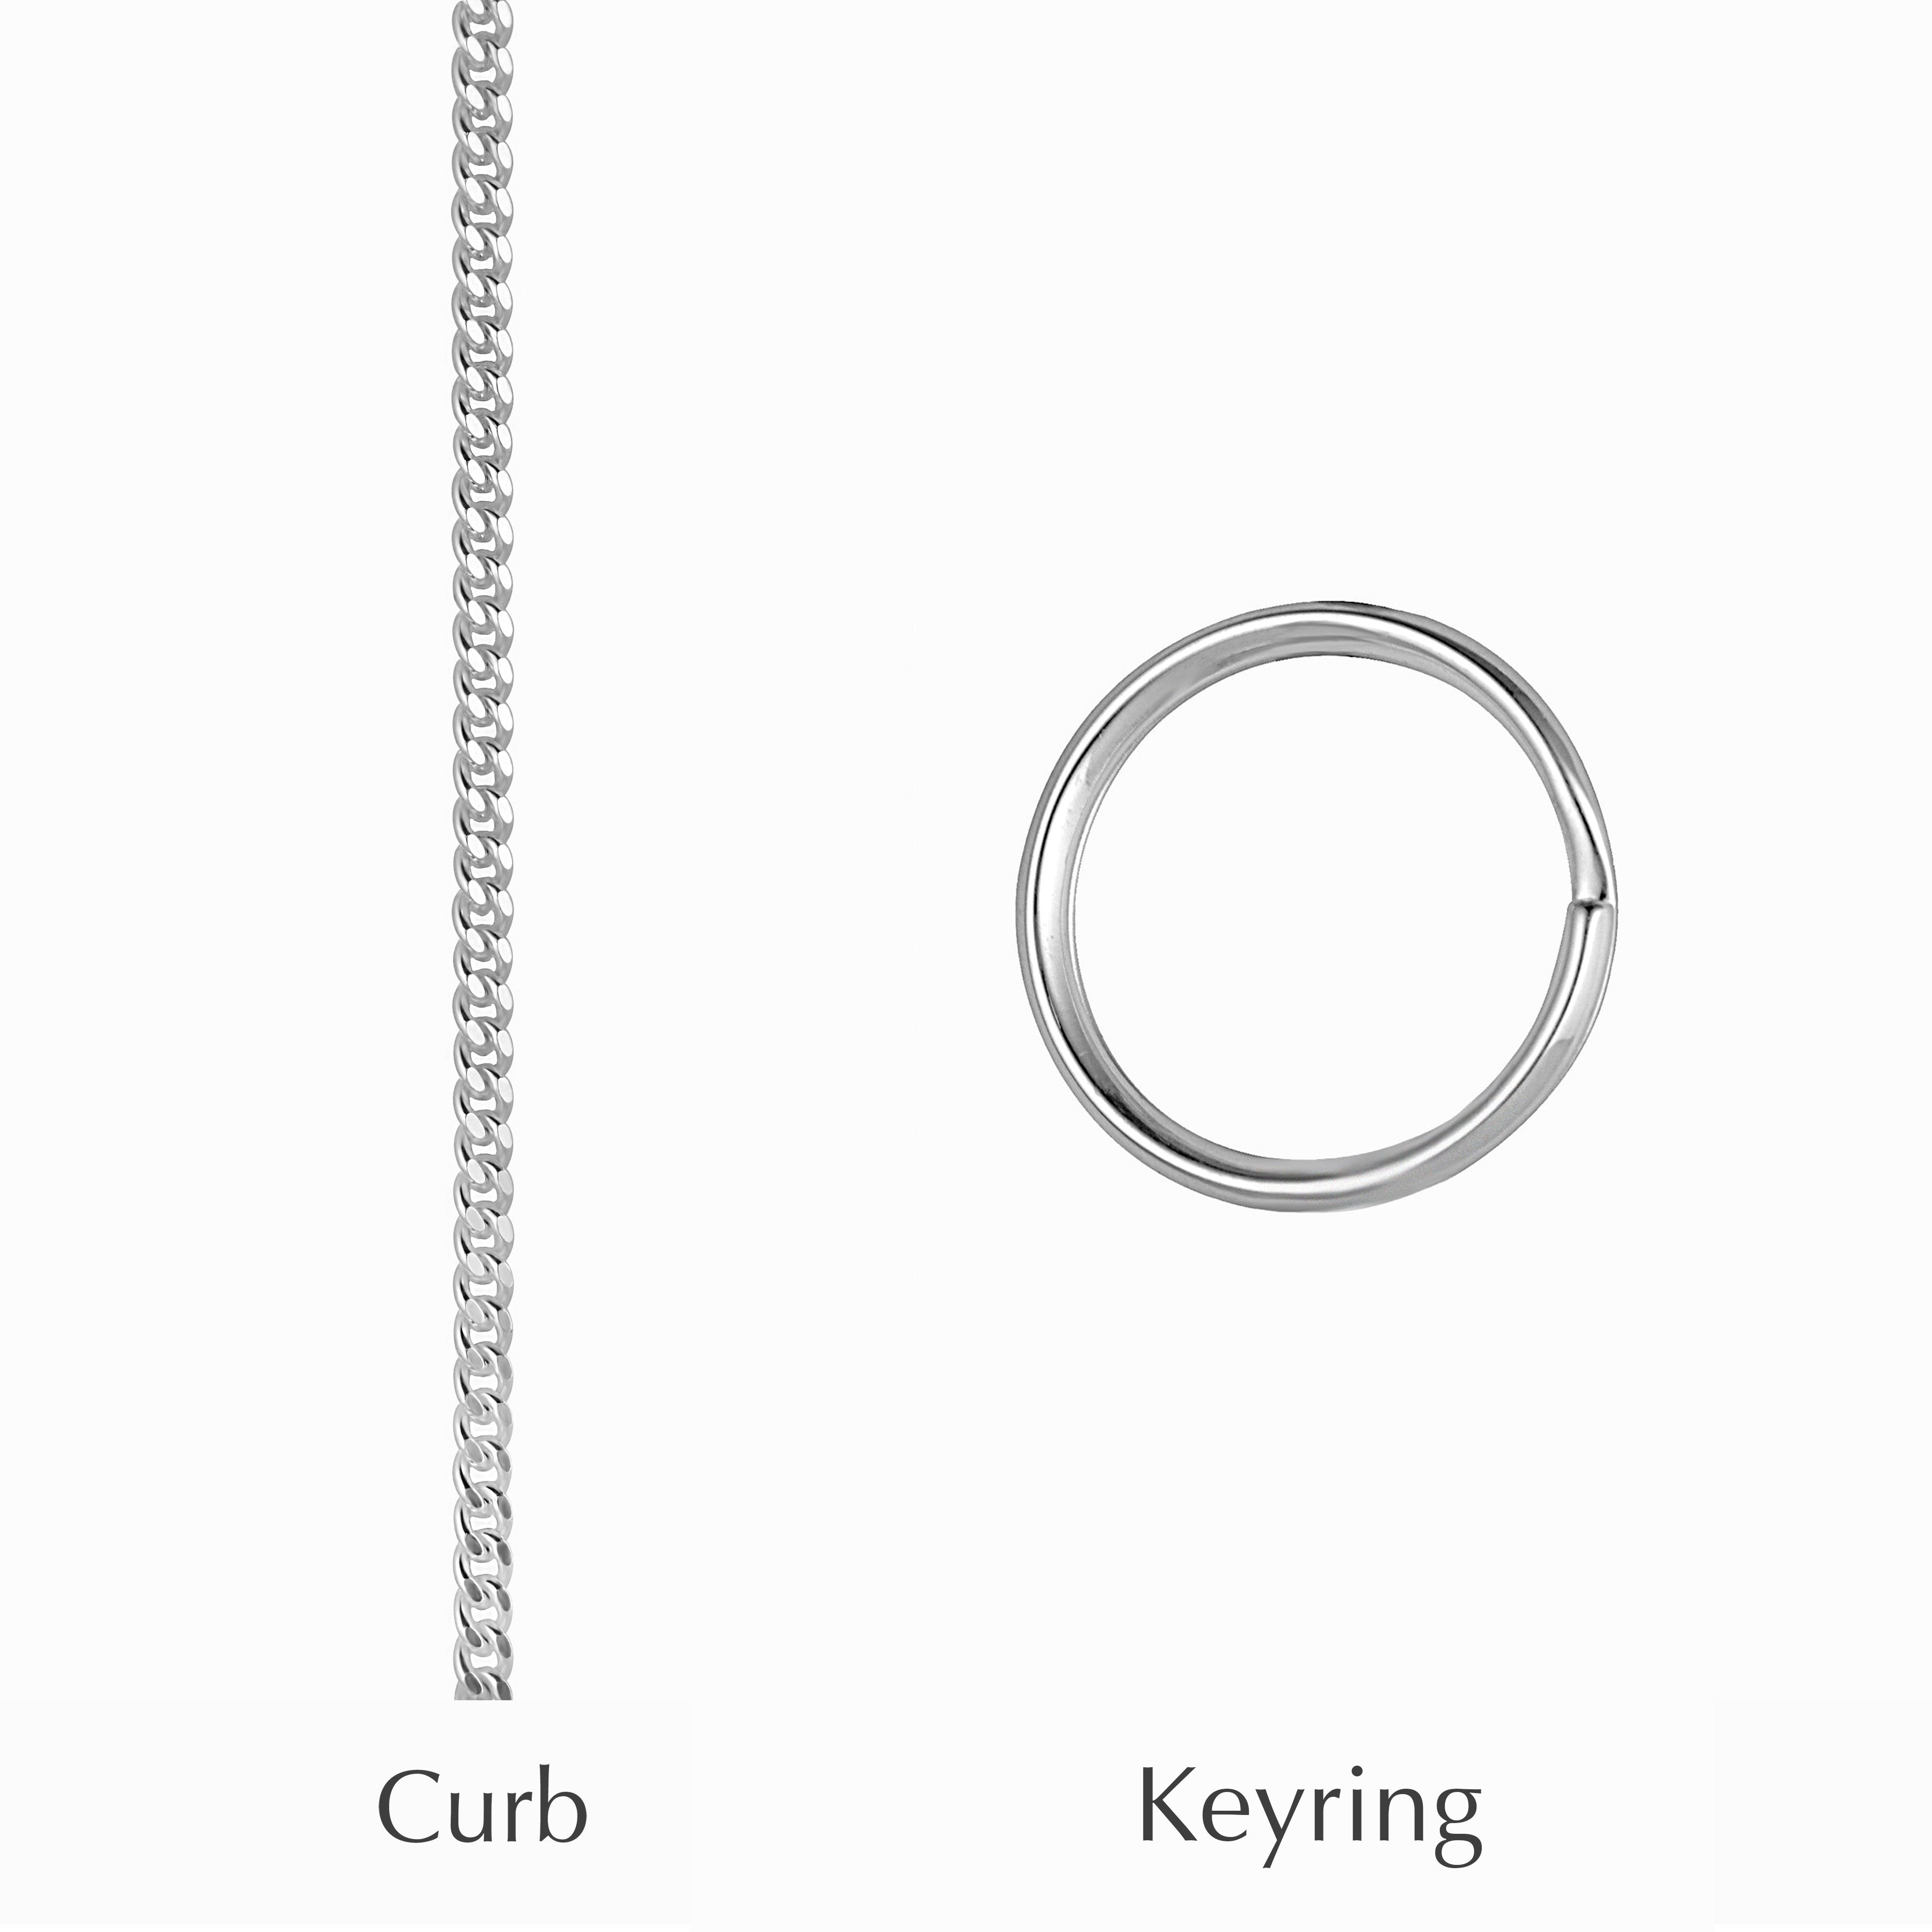 Product title: XL Premium Herringbone Locket, product type: Locket